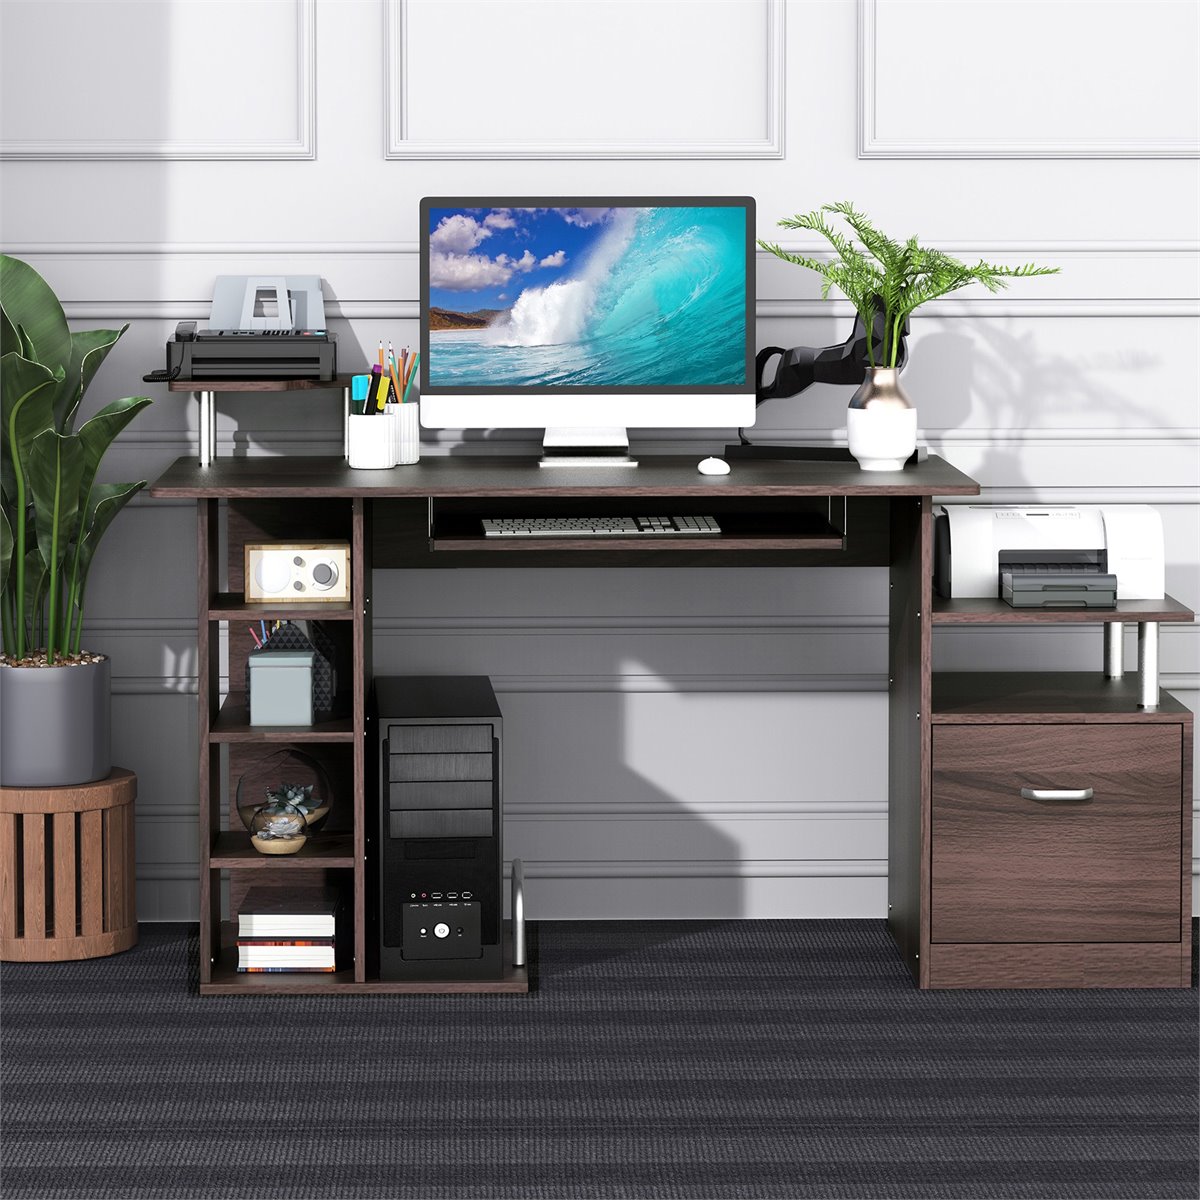 Mesa de Ordenador PC 120 cm Mesa Escritorio de Oficina con Múltiples  Estantes Cajón Bandeja de Teclado Soportes para Monitor Impresora 152x60x88  cm